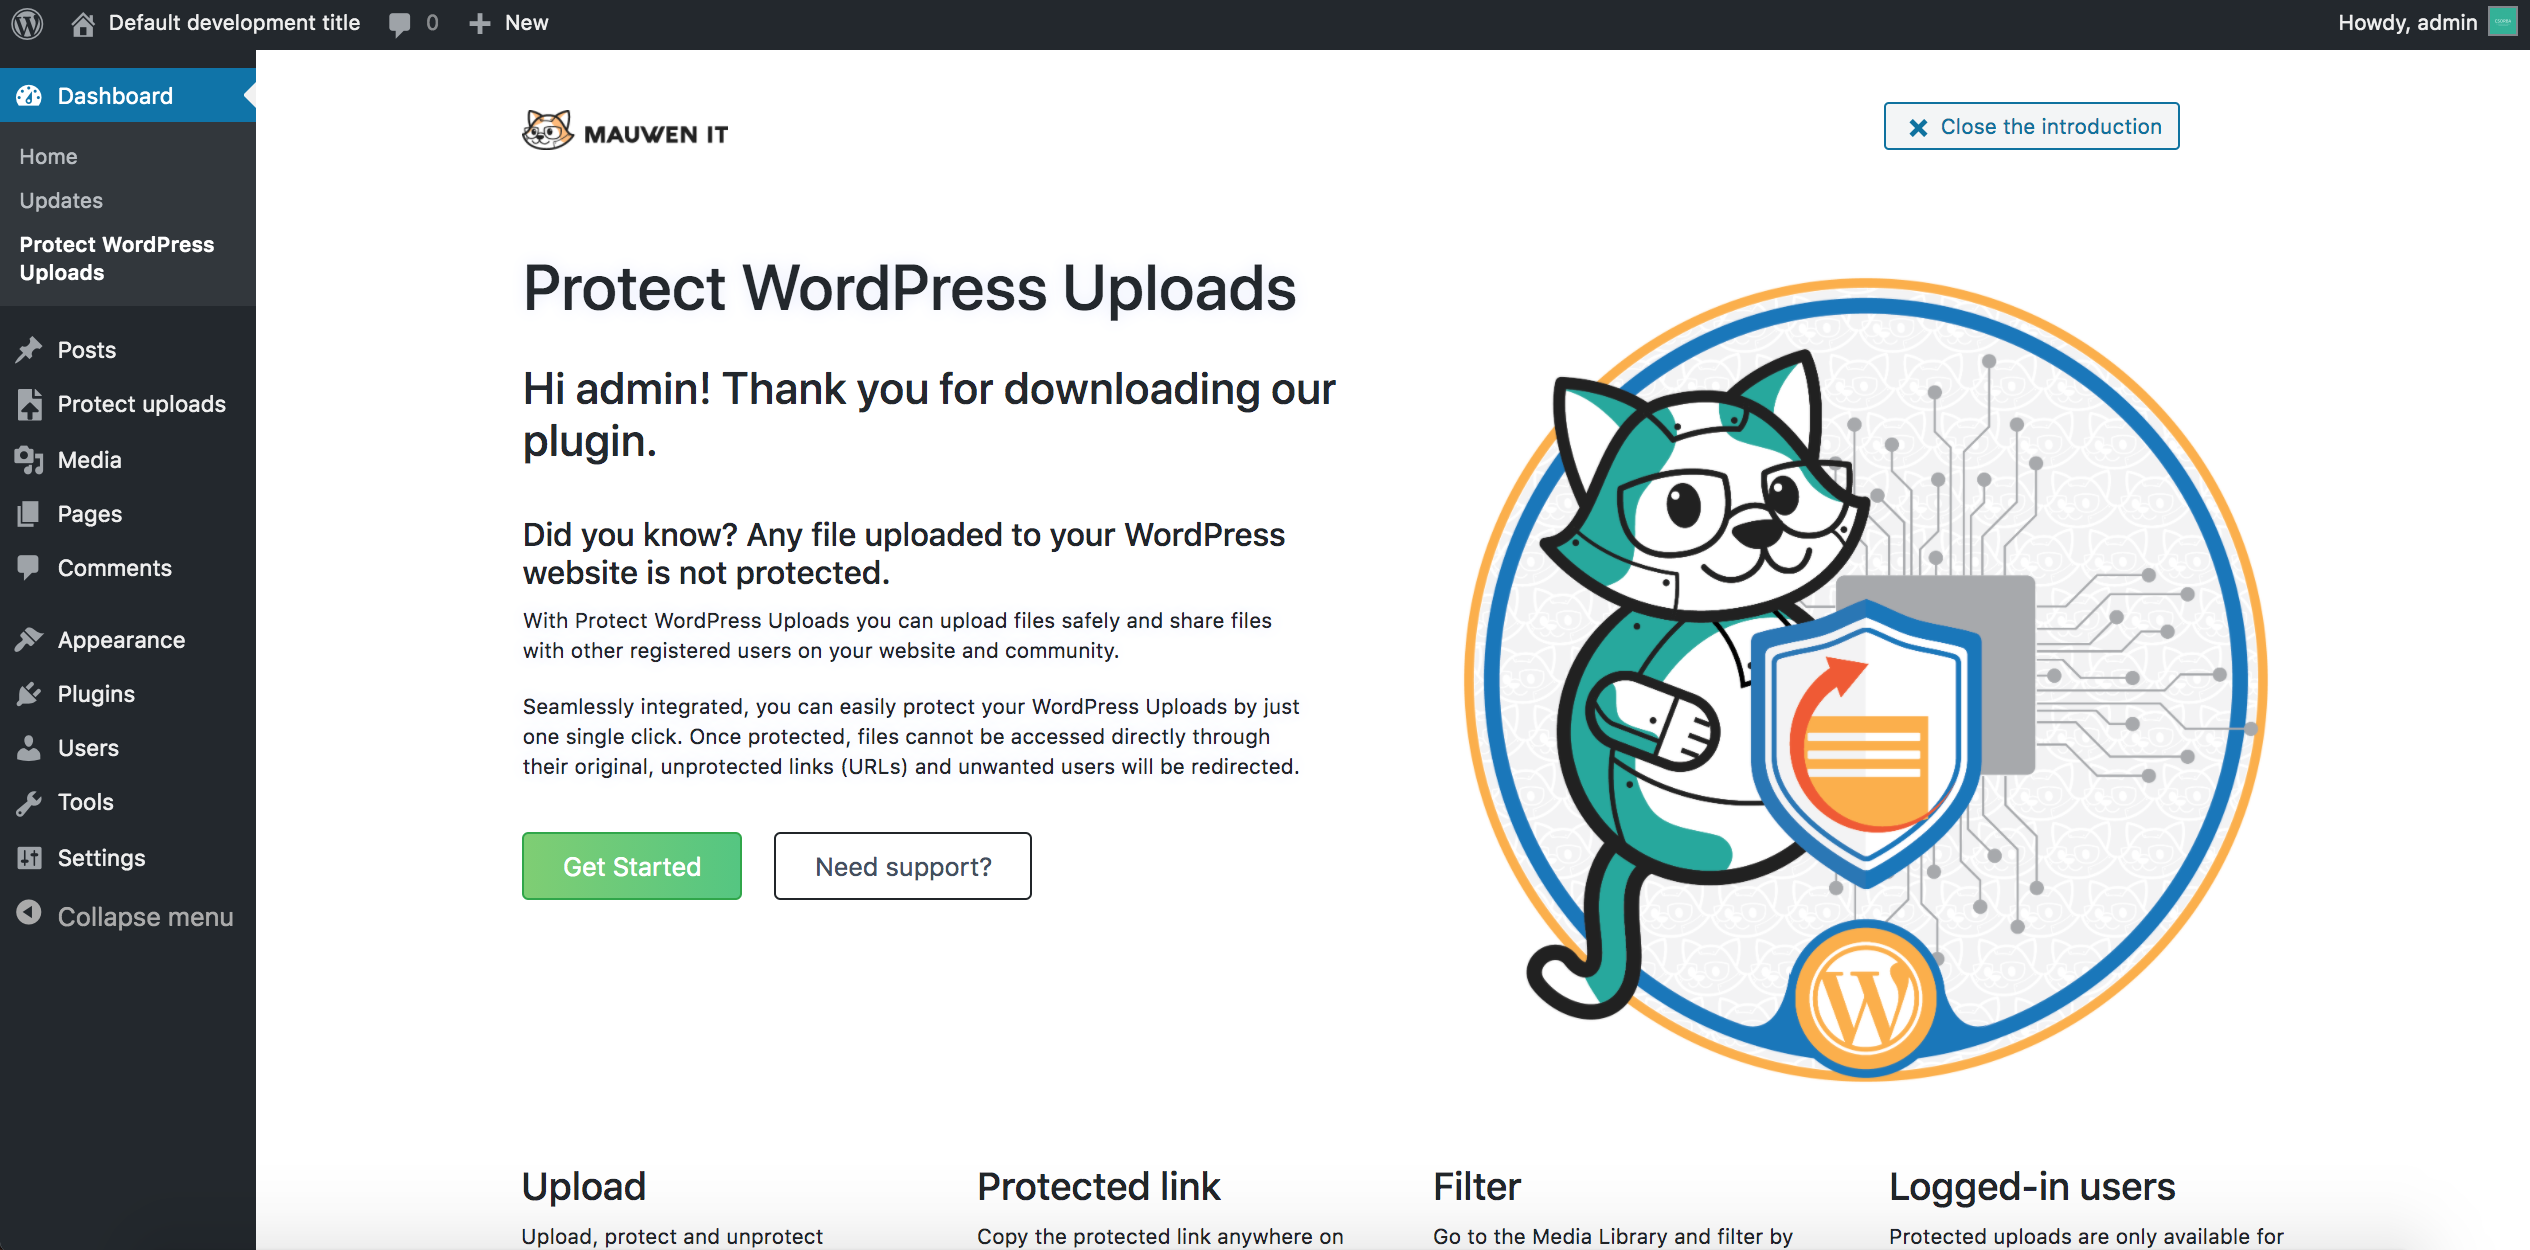 Protect WordPress Uploads introduction.